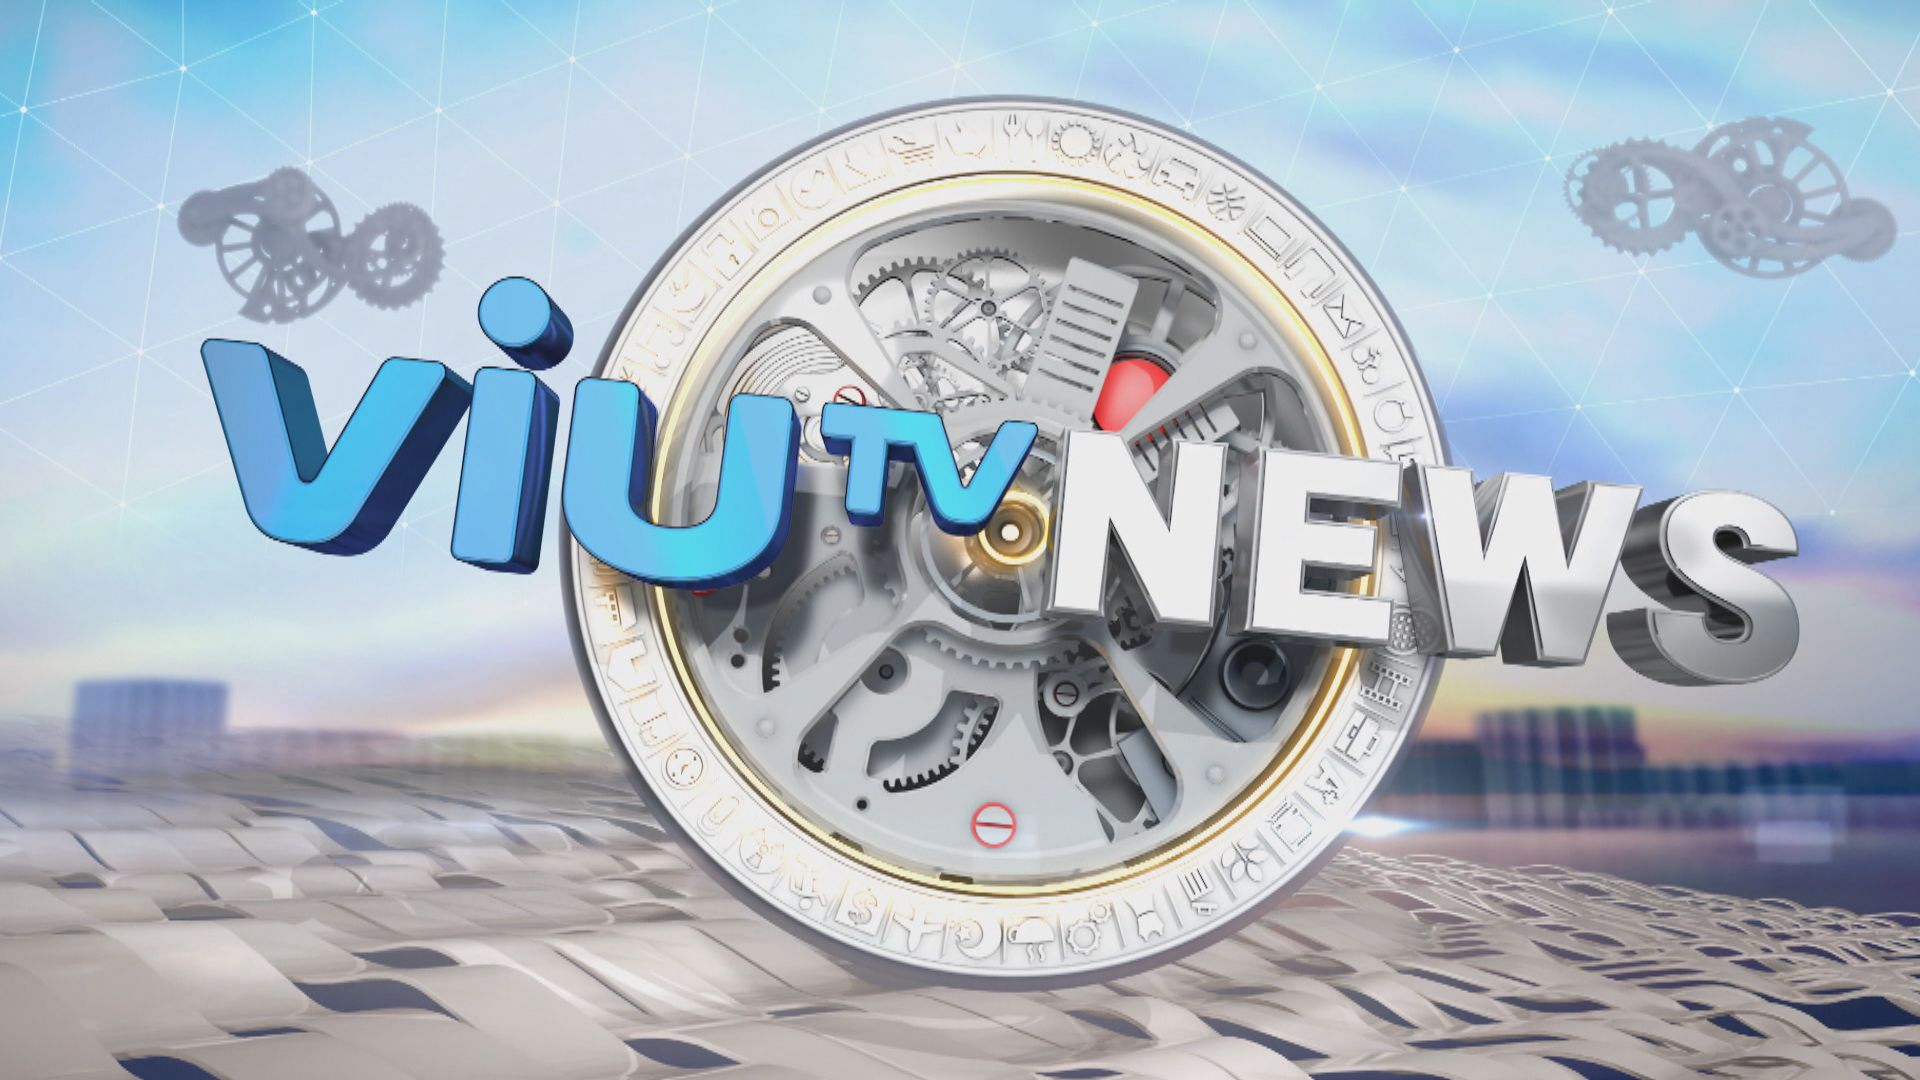 ViuTV News | News Bulletin at 7pm (22.12.2022)